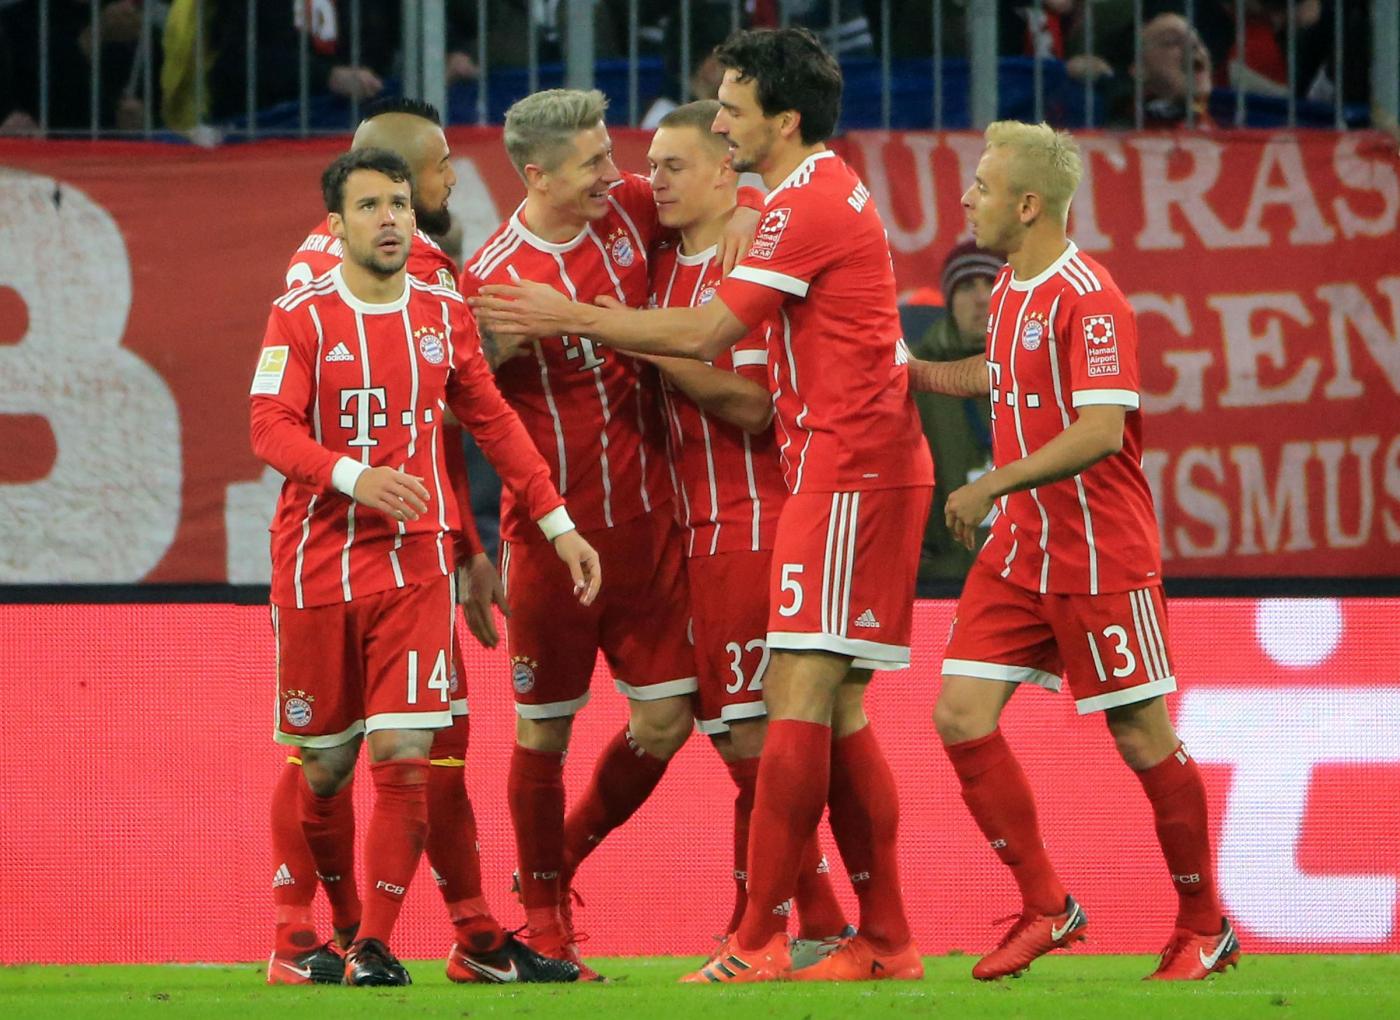 Bayern-Monchengladbach 14 aprile, analisi e pronostico Bundesliga giornata 30